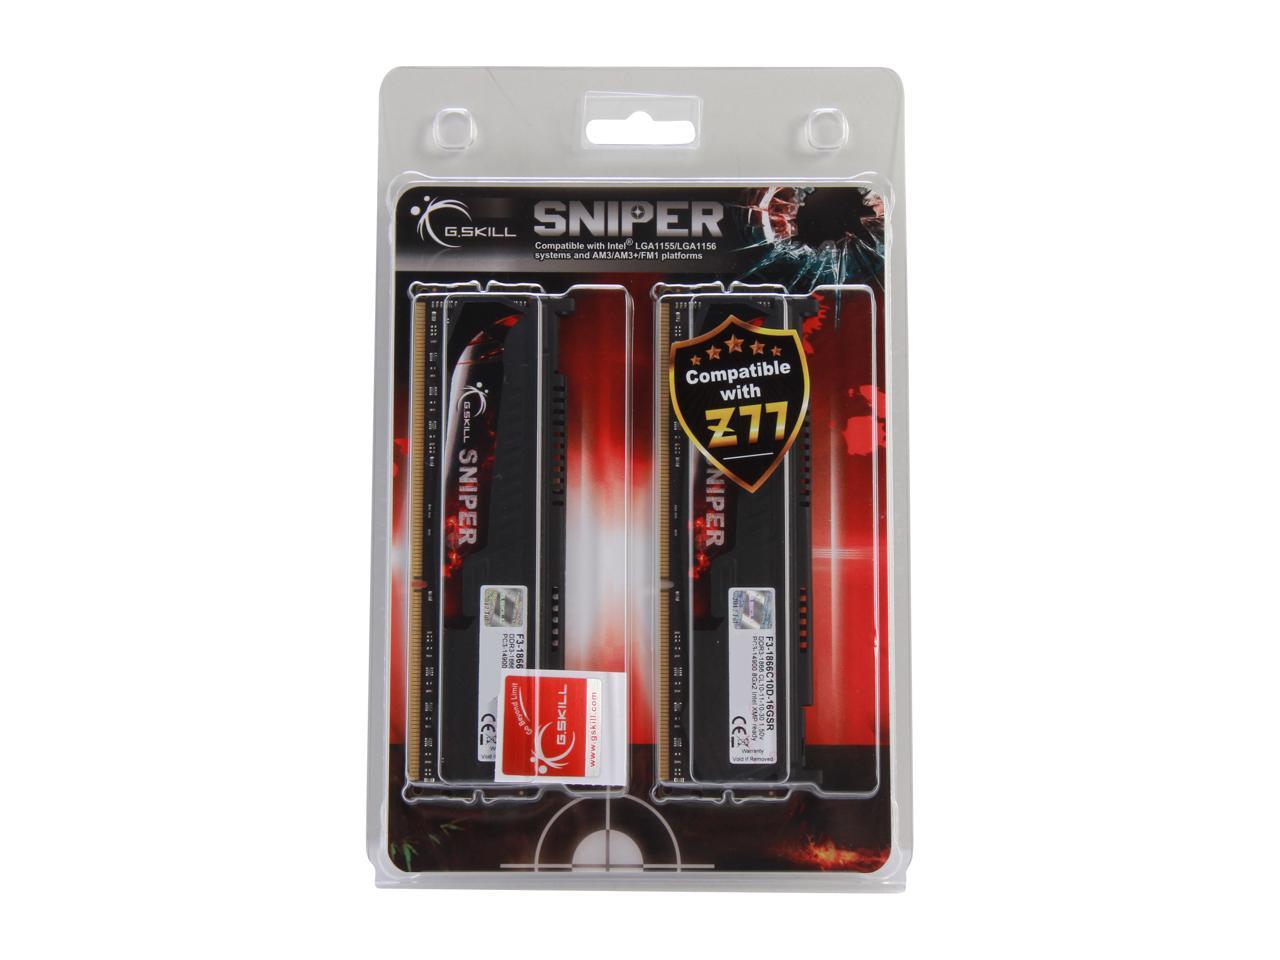 G.SKILL Sniper Gaming Series 16GB (2 x 8GB) 240-Pin DDR3 SDRAM DDR3 1866 (PC3 14900) Desktop Memory Model F3-1866C10D-16GSR